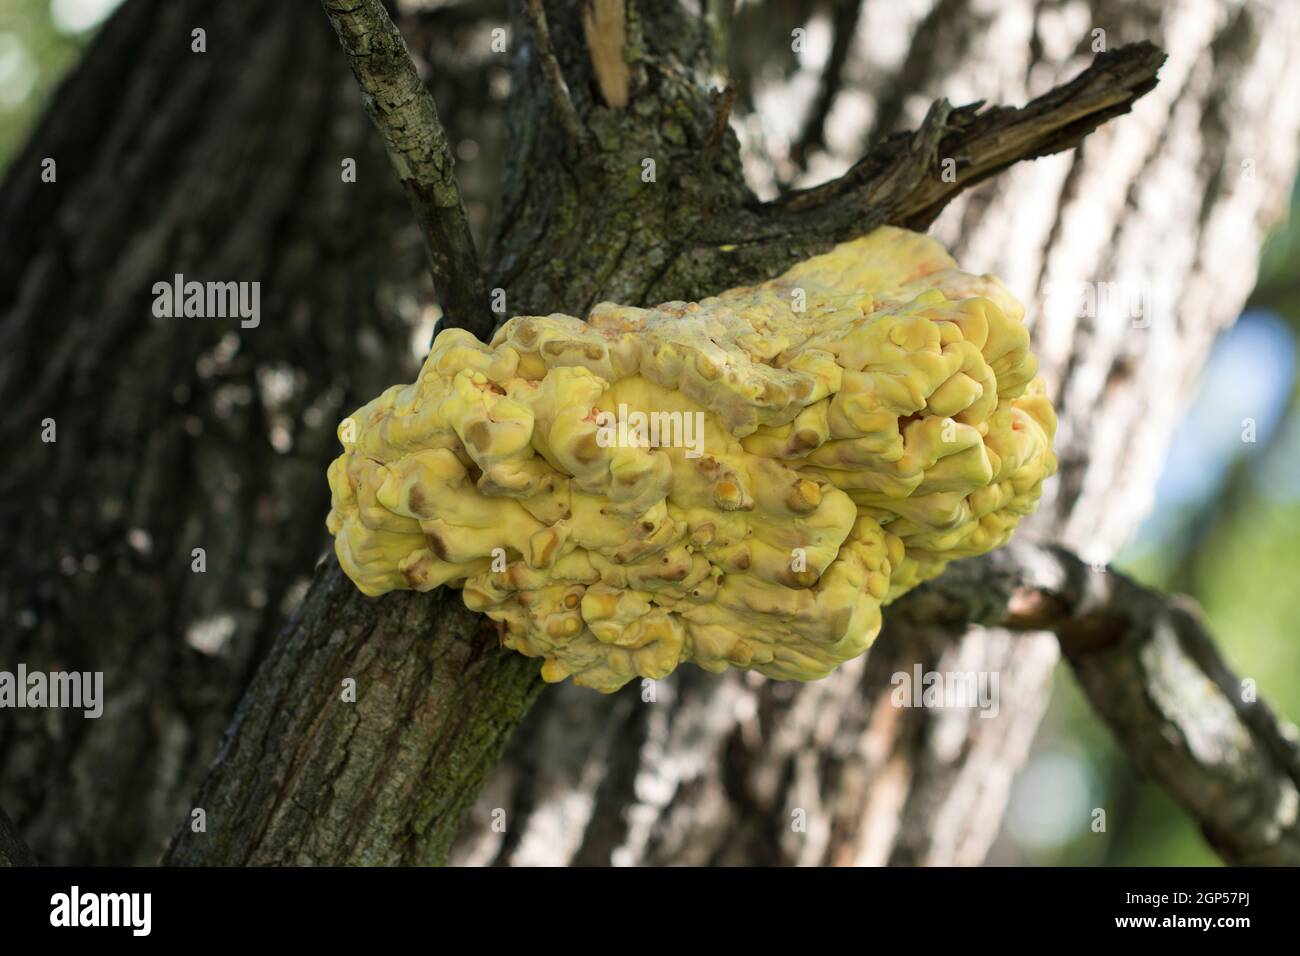 Bracket fungus Laetiporus sulphureus chicken-of-the-woods close up. Large yellow fungus growing on tree trunk. Stock Photo